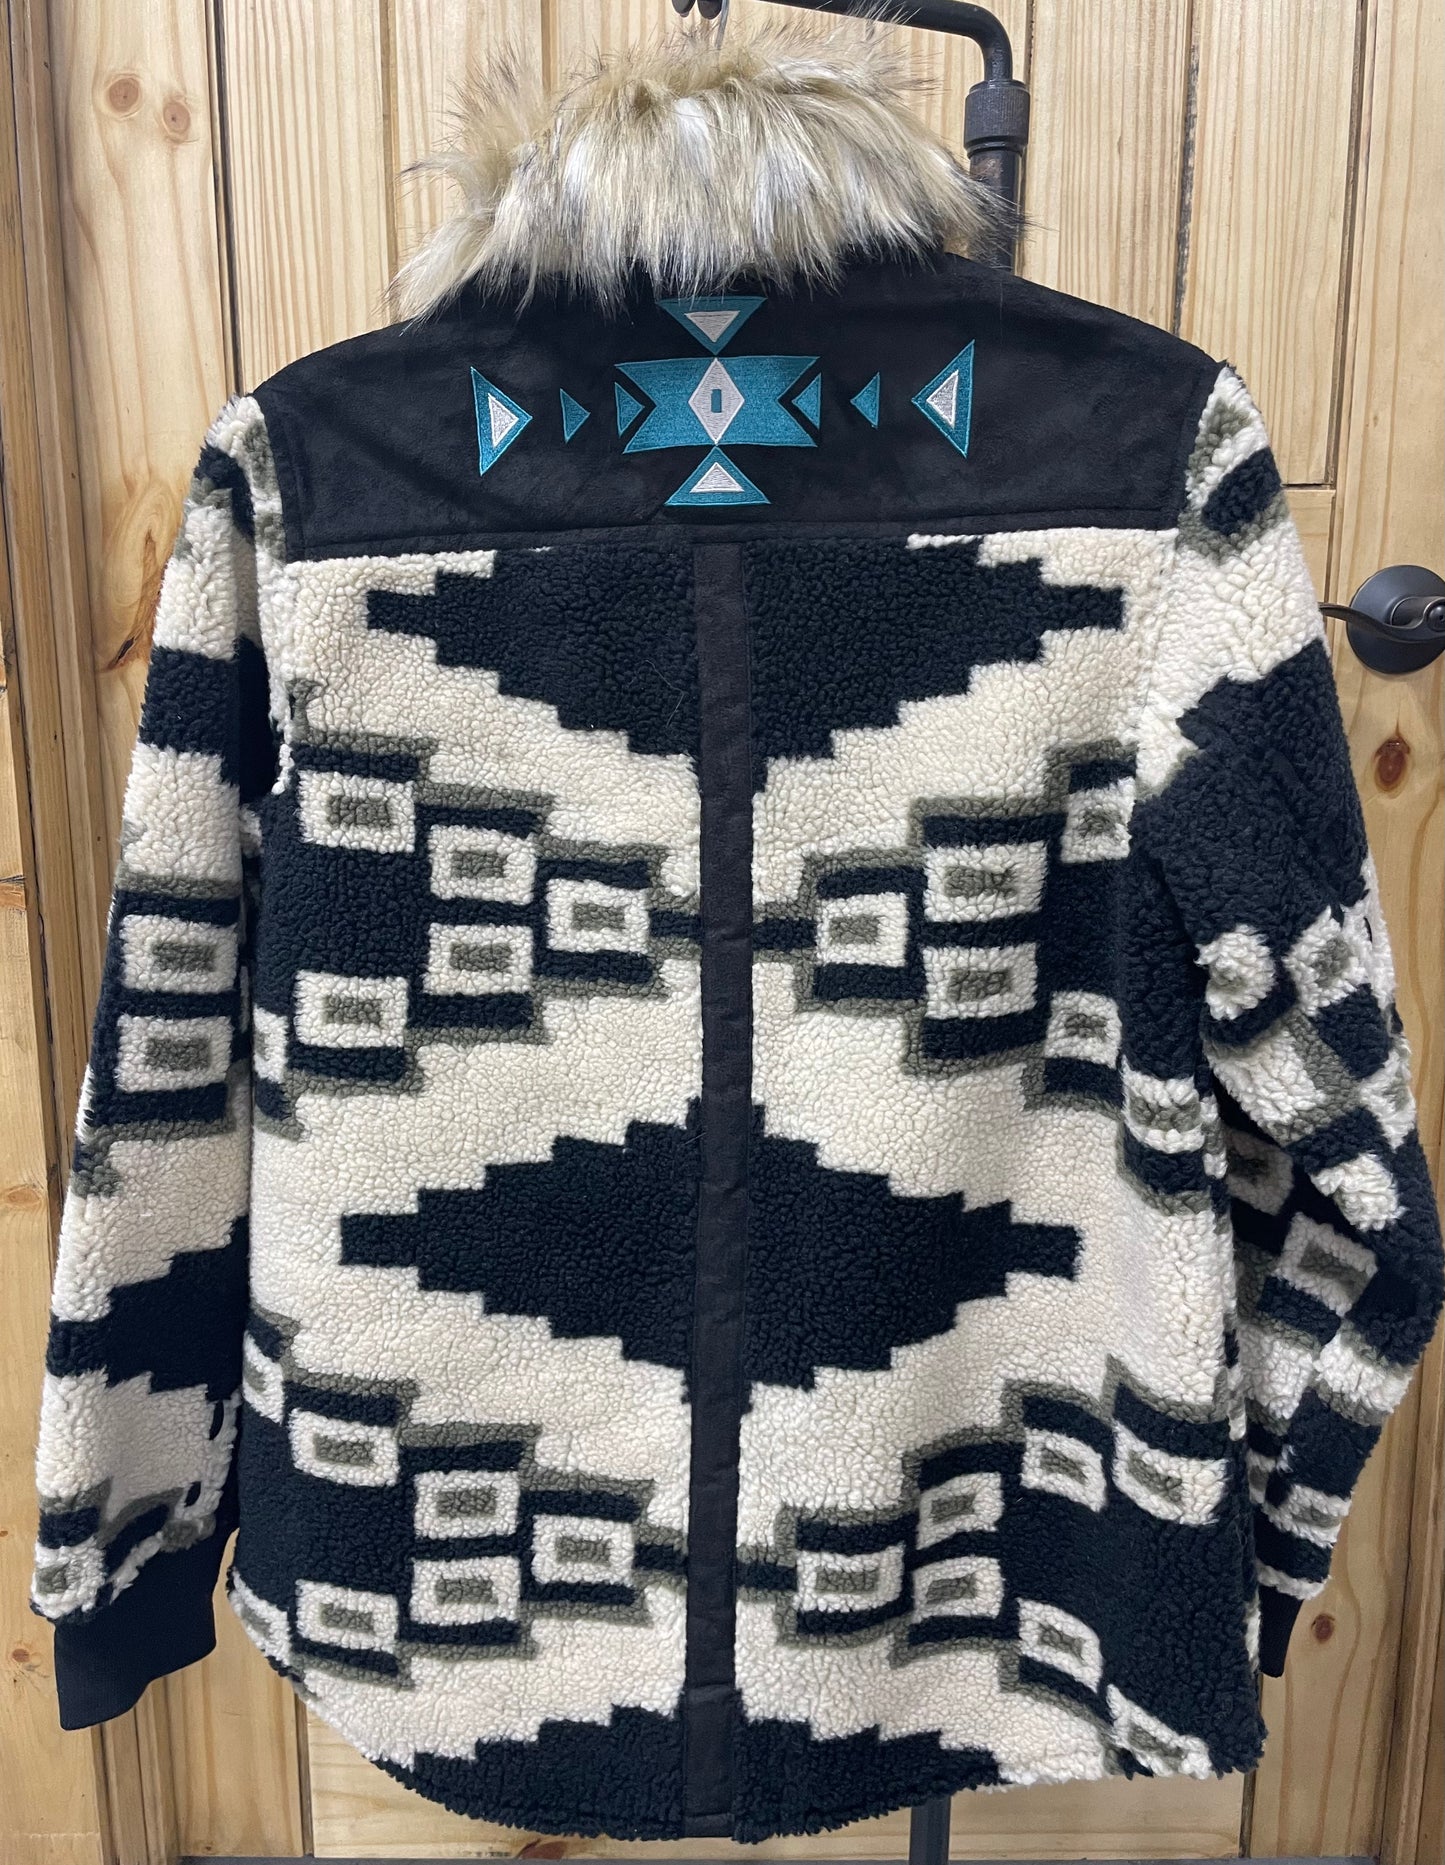 Avalanche Jacket by Tasha Polizzi